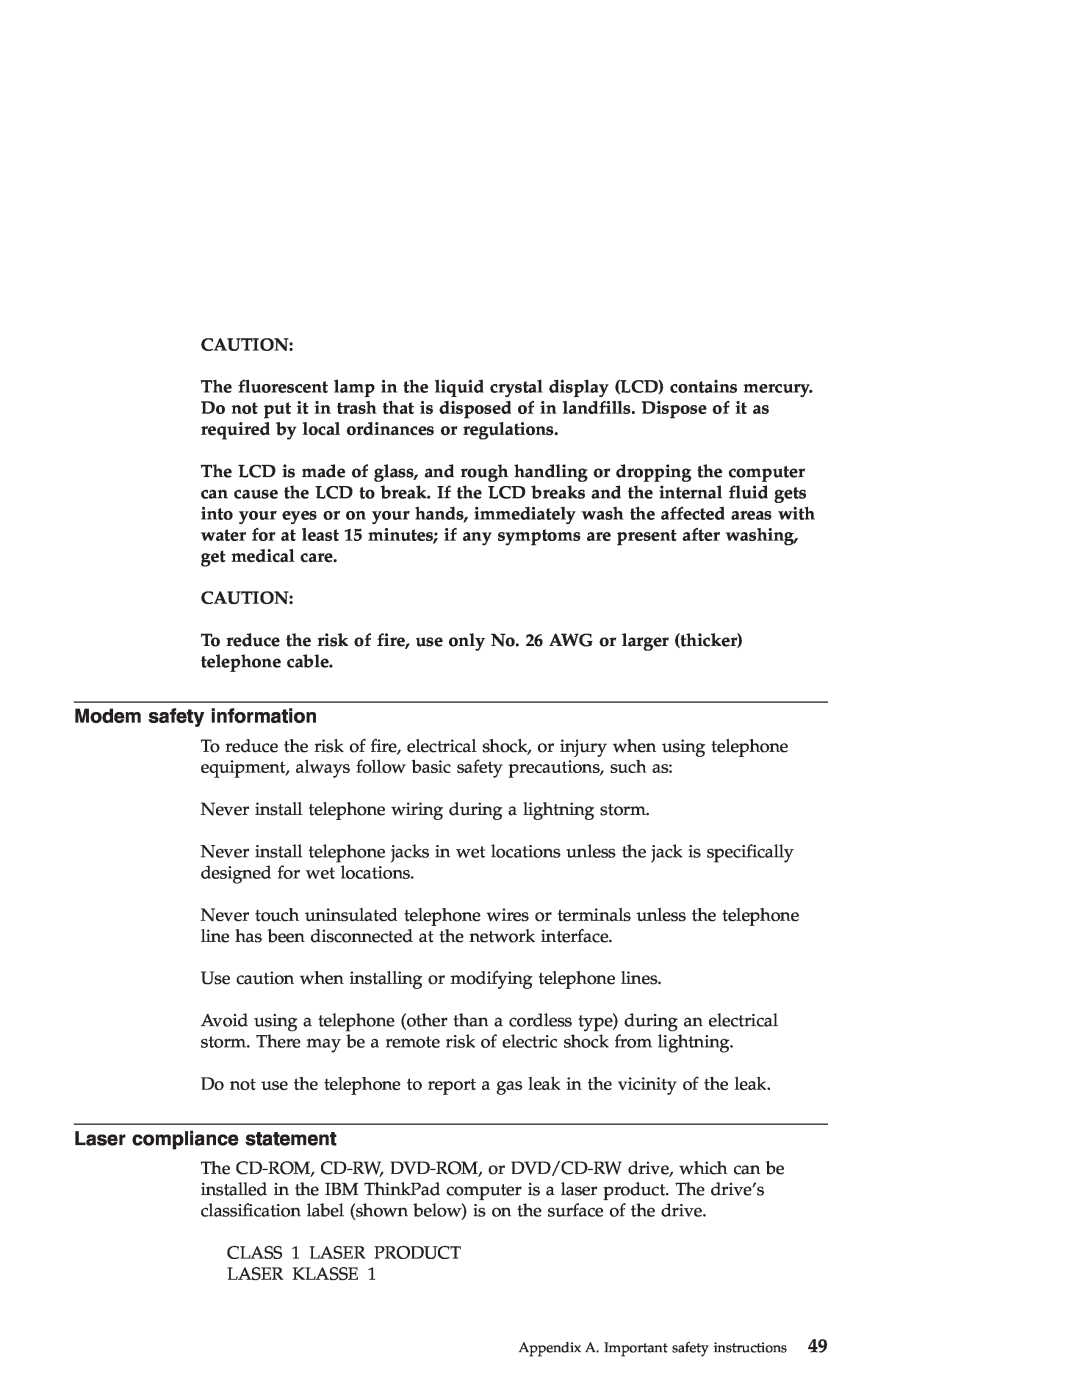 IBM R30 manual Modem safety information, Laser compliance statement 